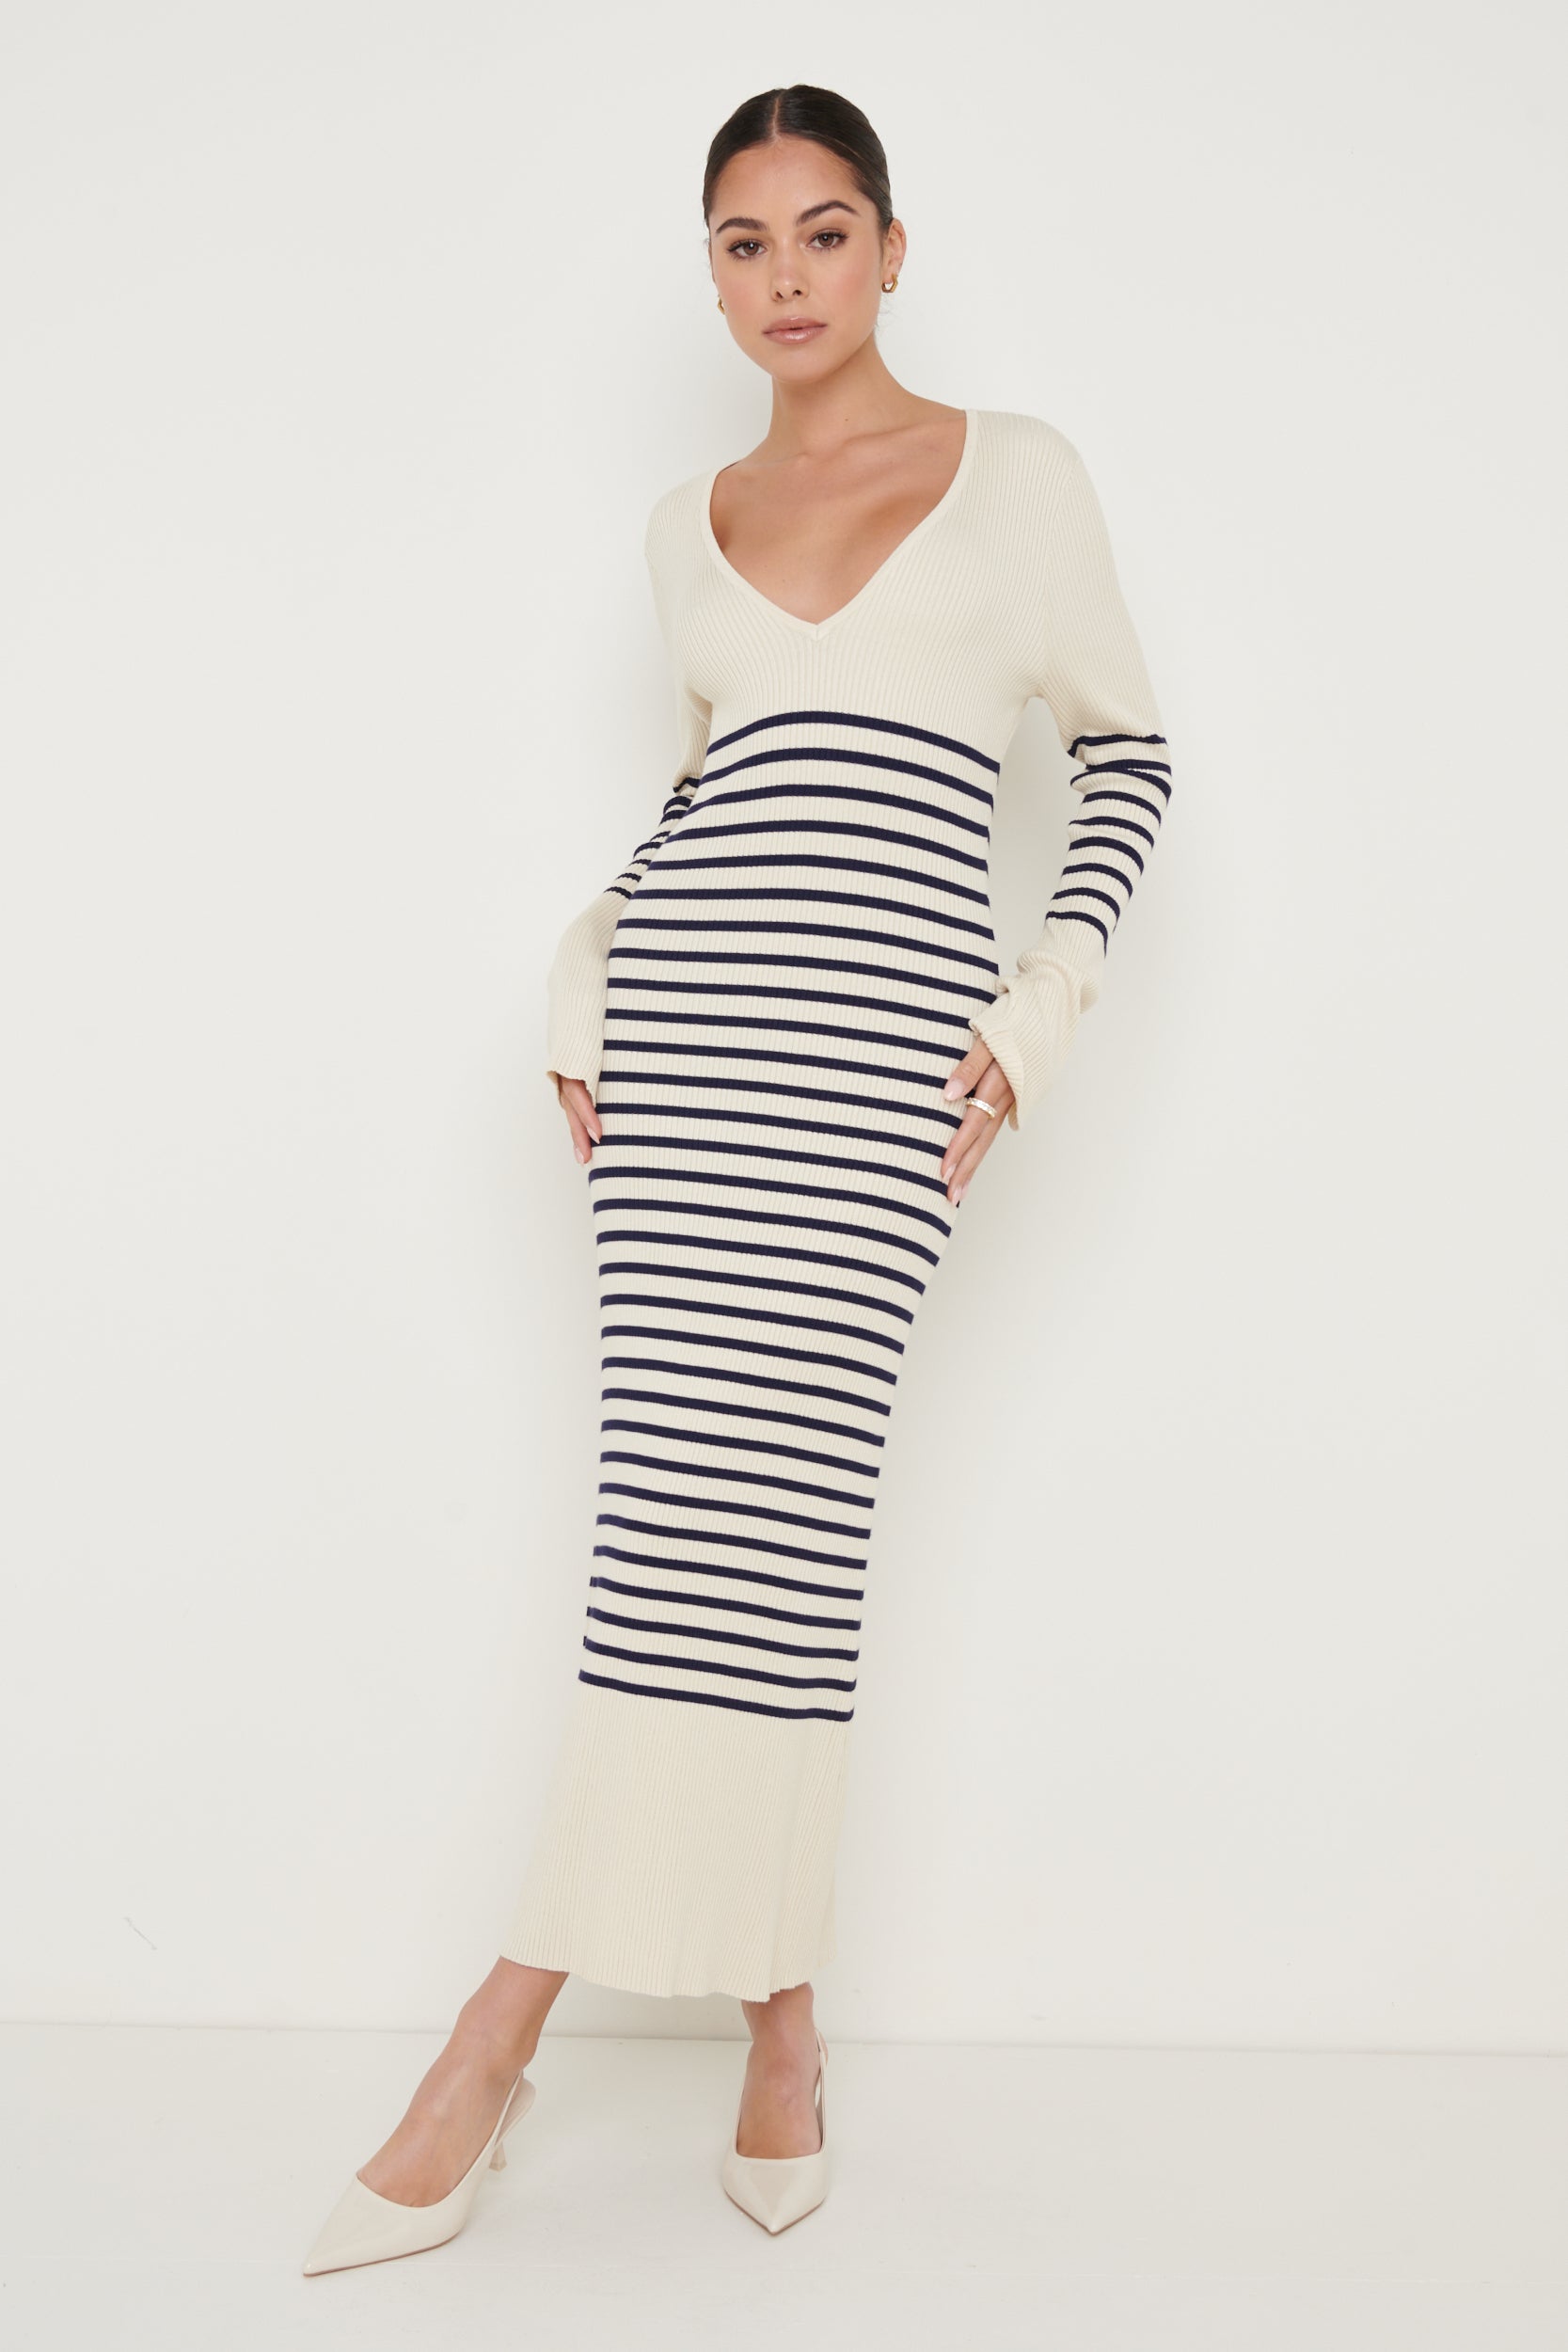 Vanessa Striped Knit Dress - Cream and Blue, M